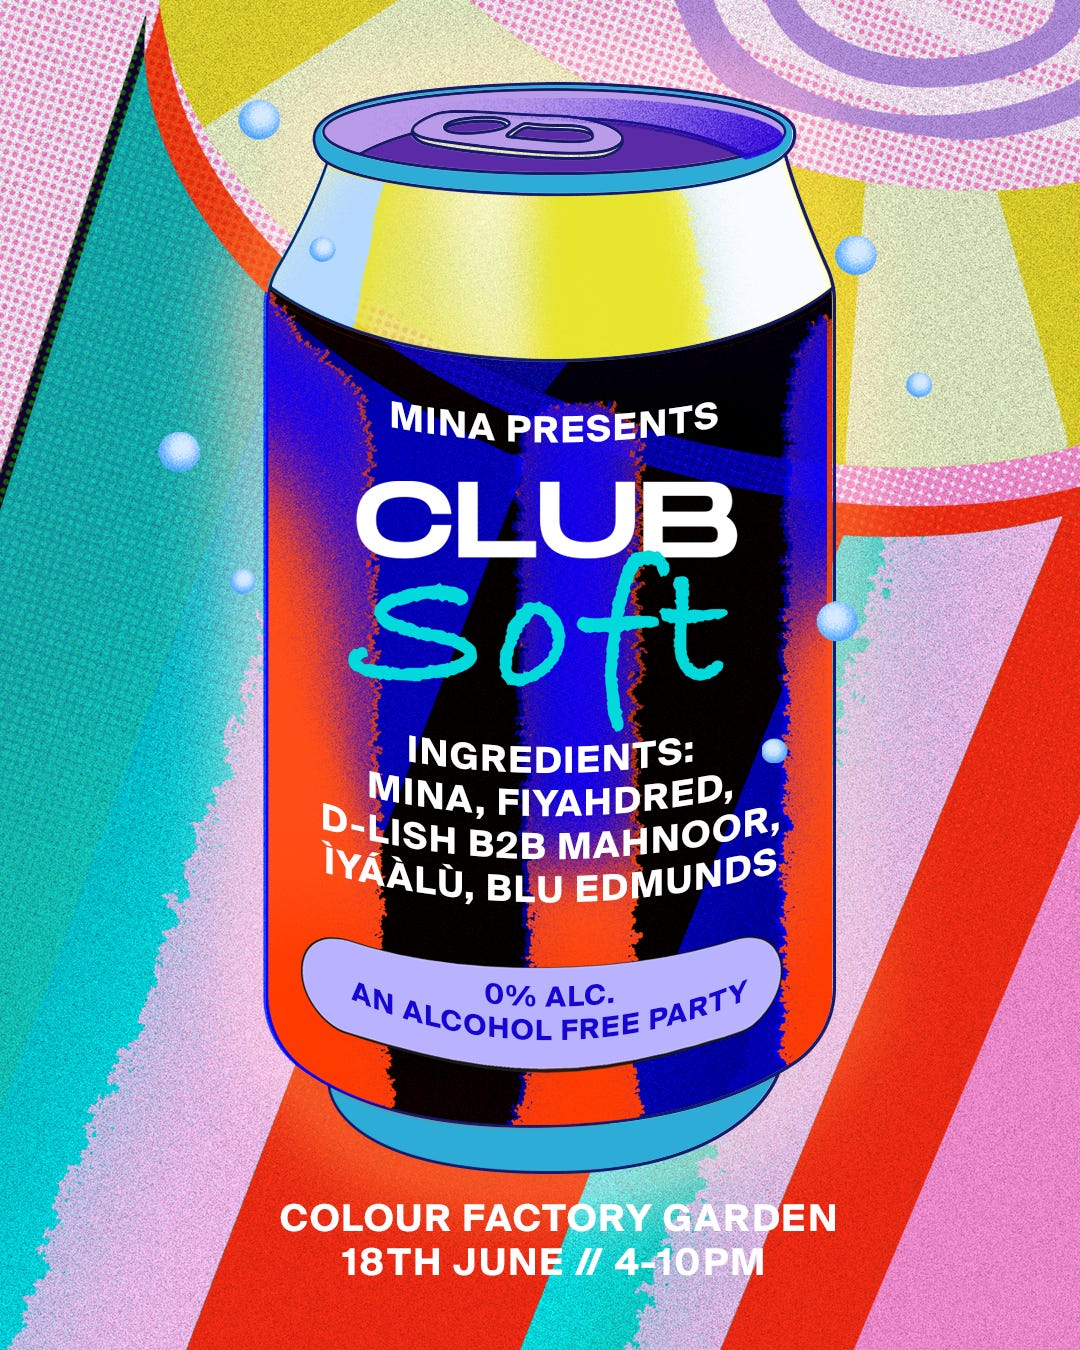 Mina presents Club Soft - Flyer front